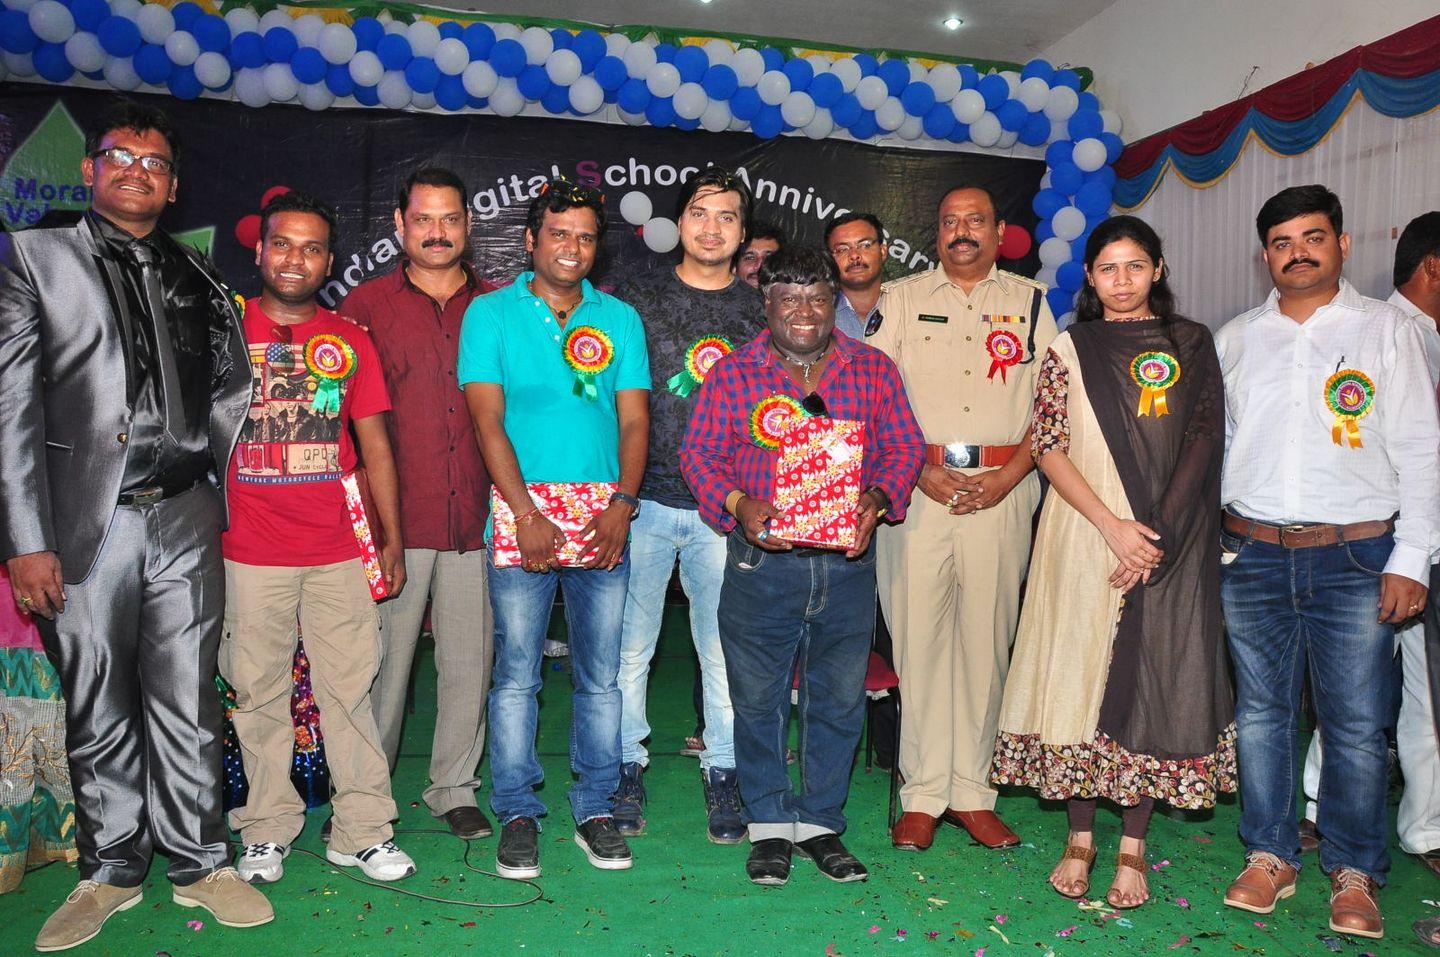 Pidugu Movie Team at Indian Digital School Annual day Function